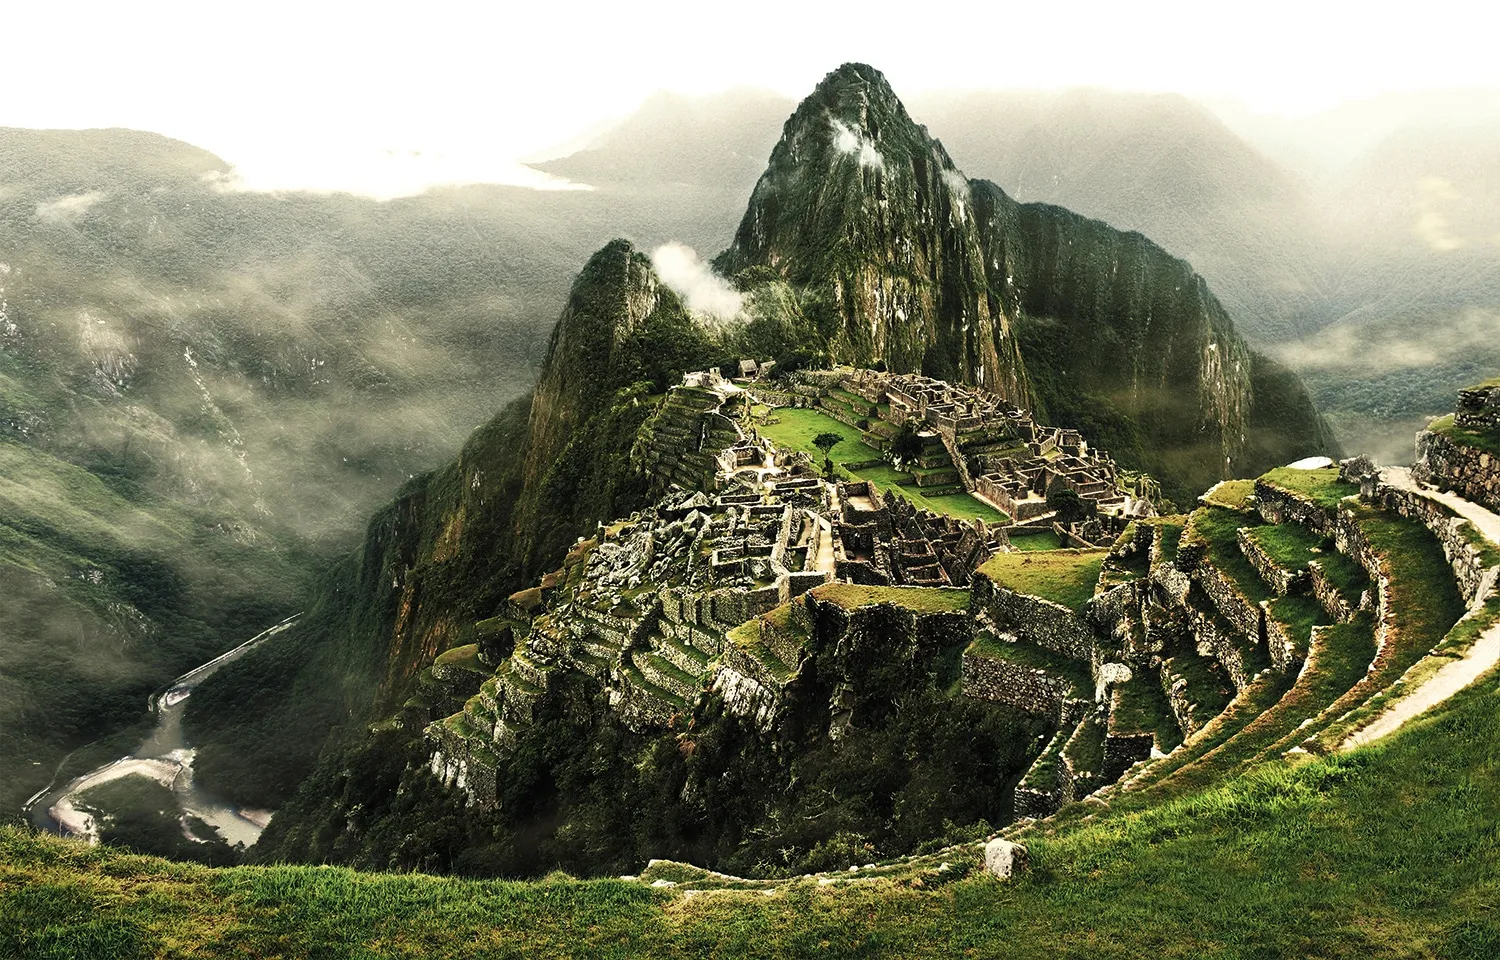 PAPERMOON Fototapete "Machu Picchu" Tapeten Gr. B/L: 3 m x 2,23 m, Bahnen: 6 St., bunt (mehrfarbig) Fototapeten